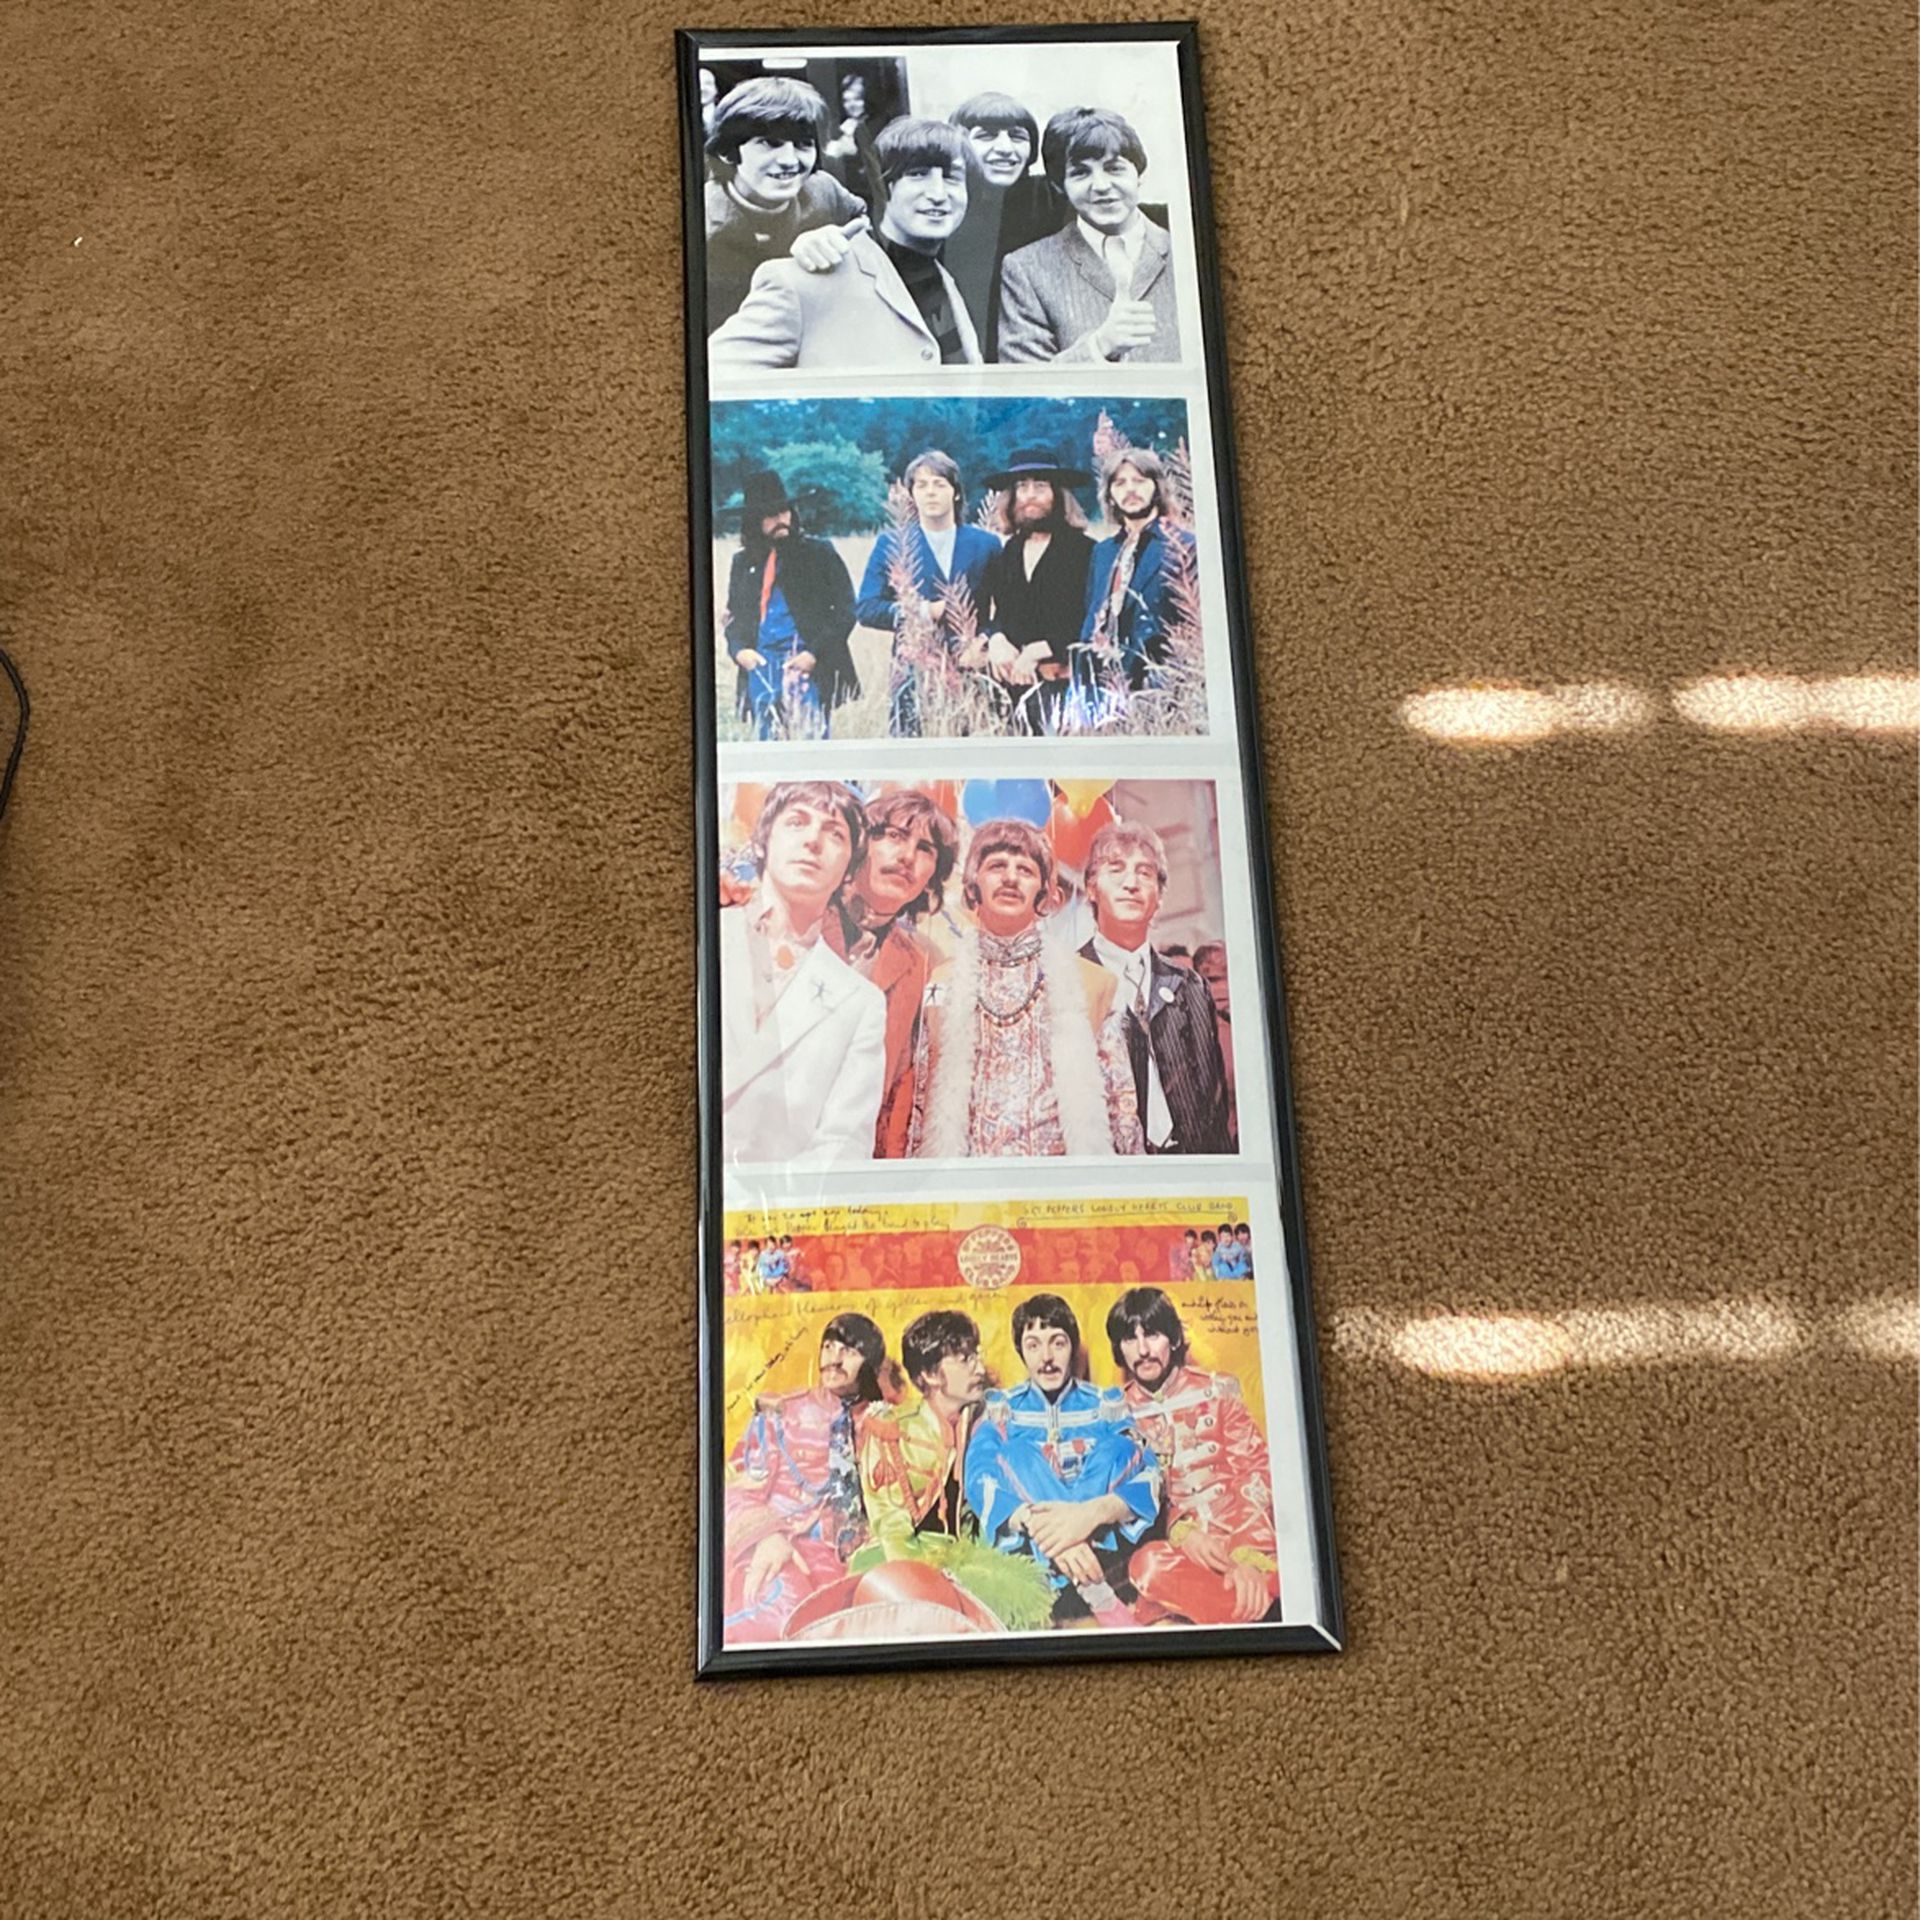 Beatles Framed Pictures $25